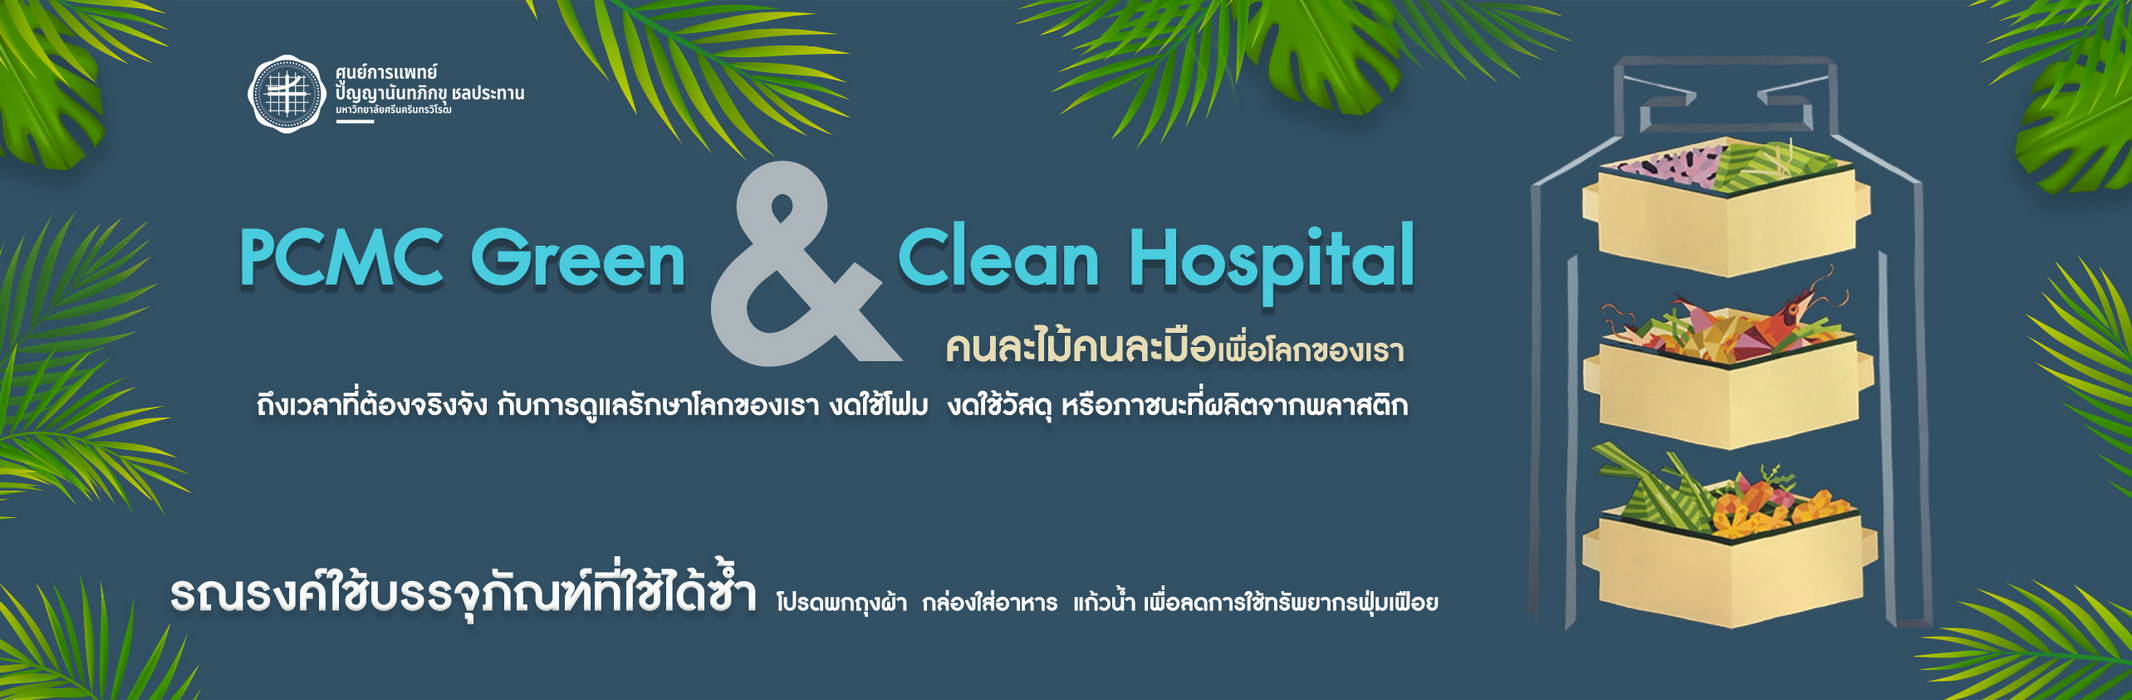 PCMC Green & clean Hospital